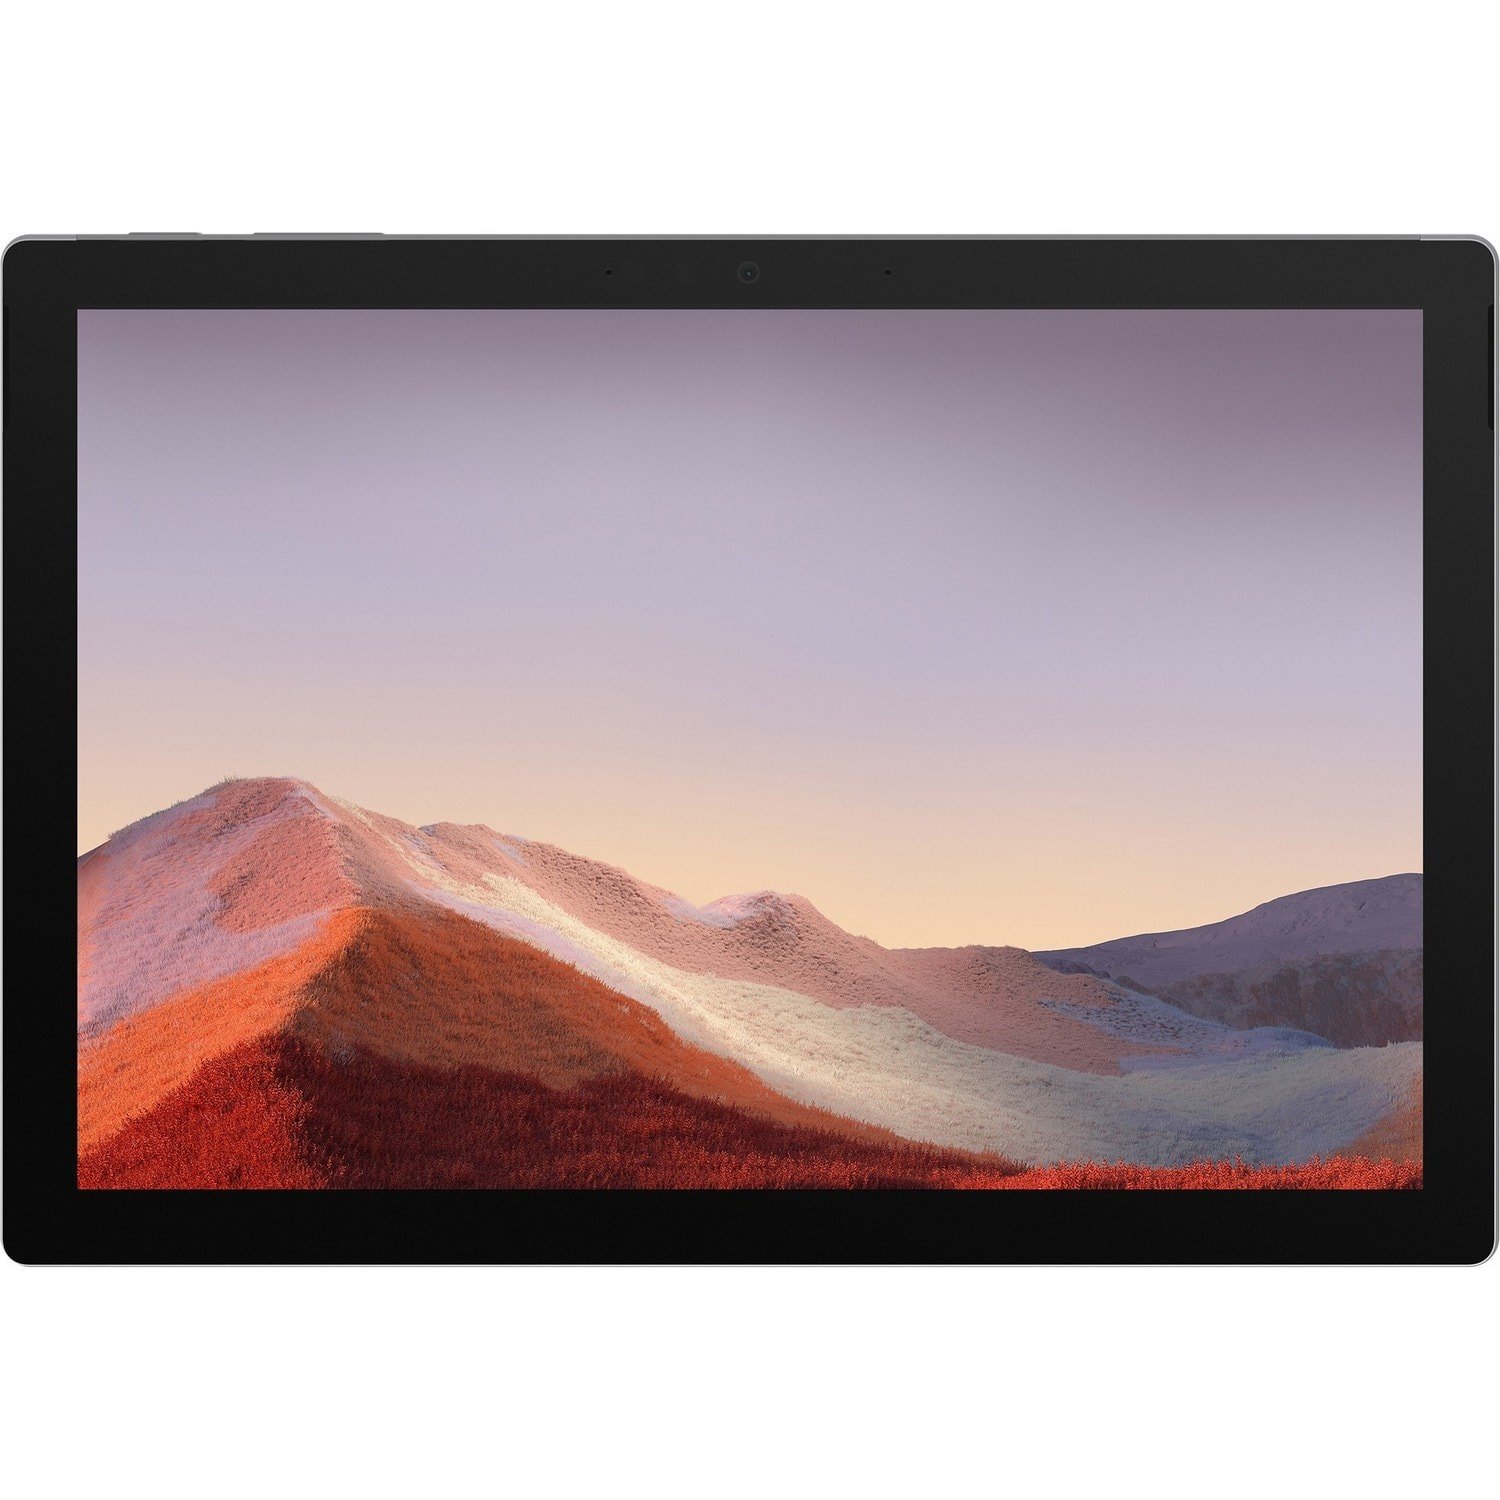 Microsoft Surface Pro 7 Tablet - 12.3" - Core i5 10th Gen - 8 GB RAM - 128 GB SSD - Windows 10 Pro - Platinum